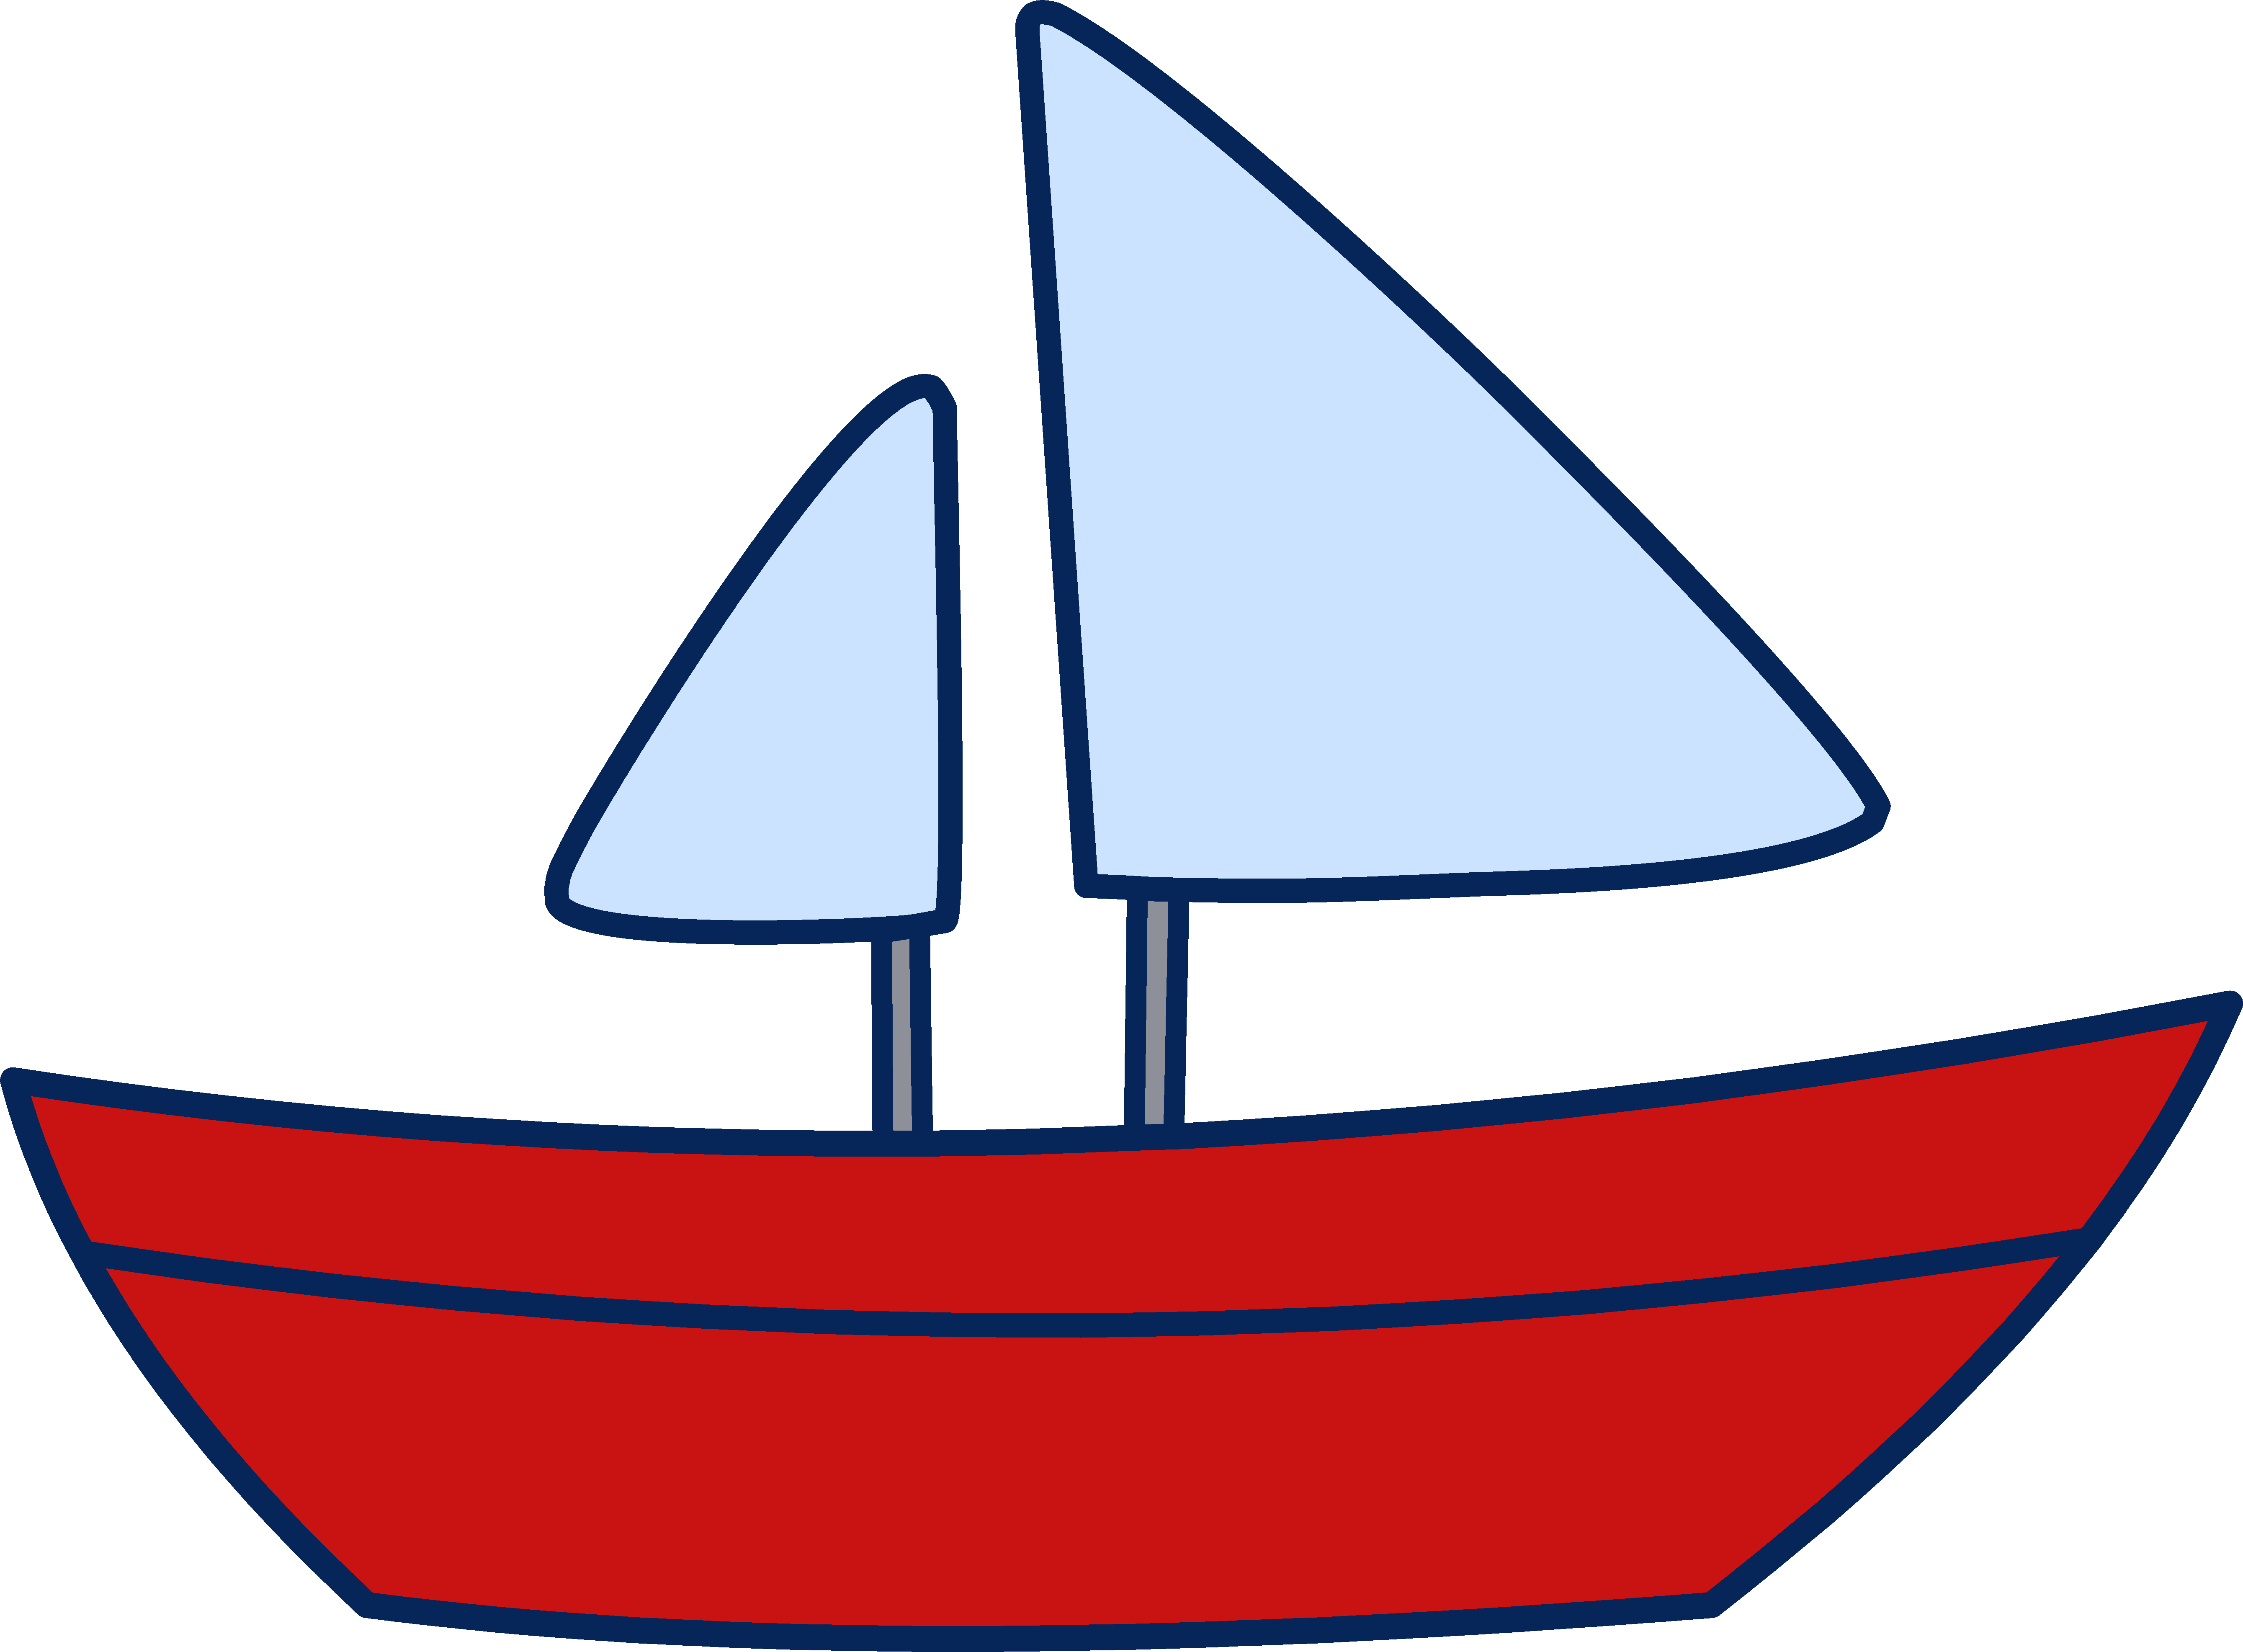 Clip art of boat clipart imag